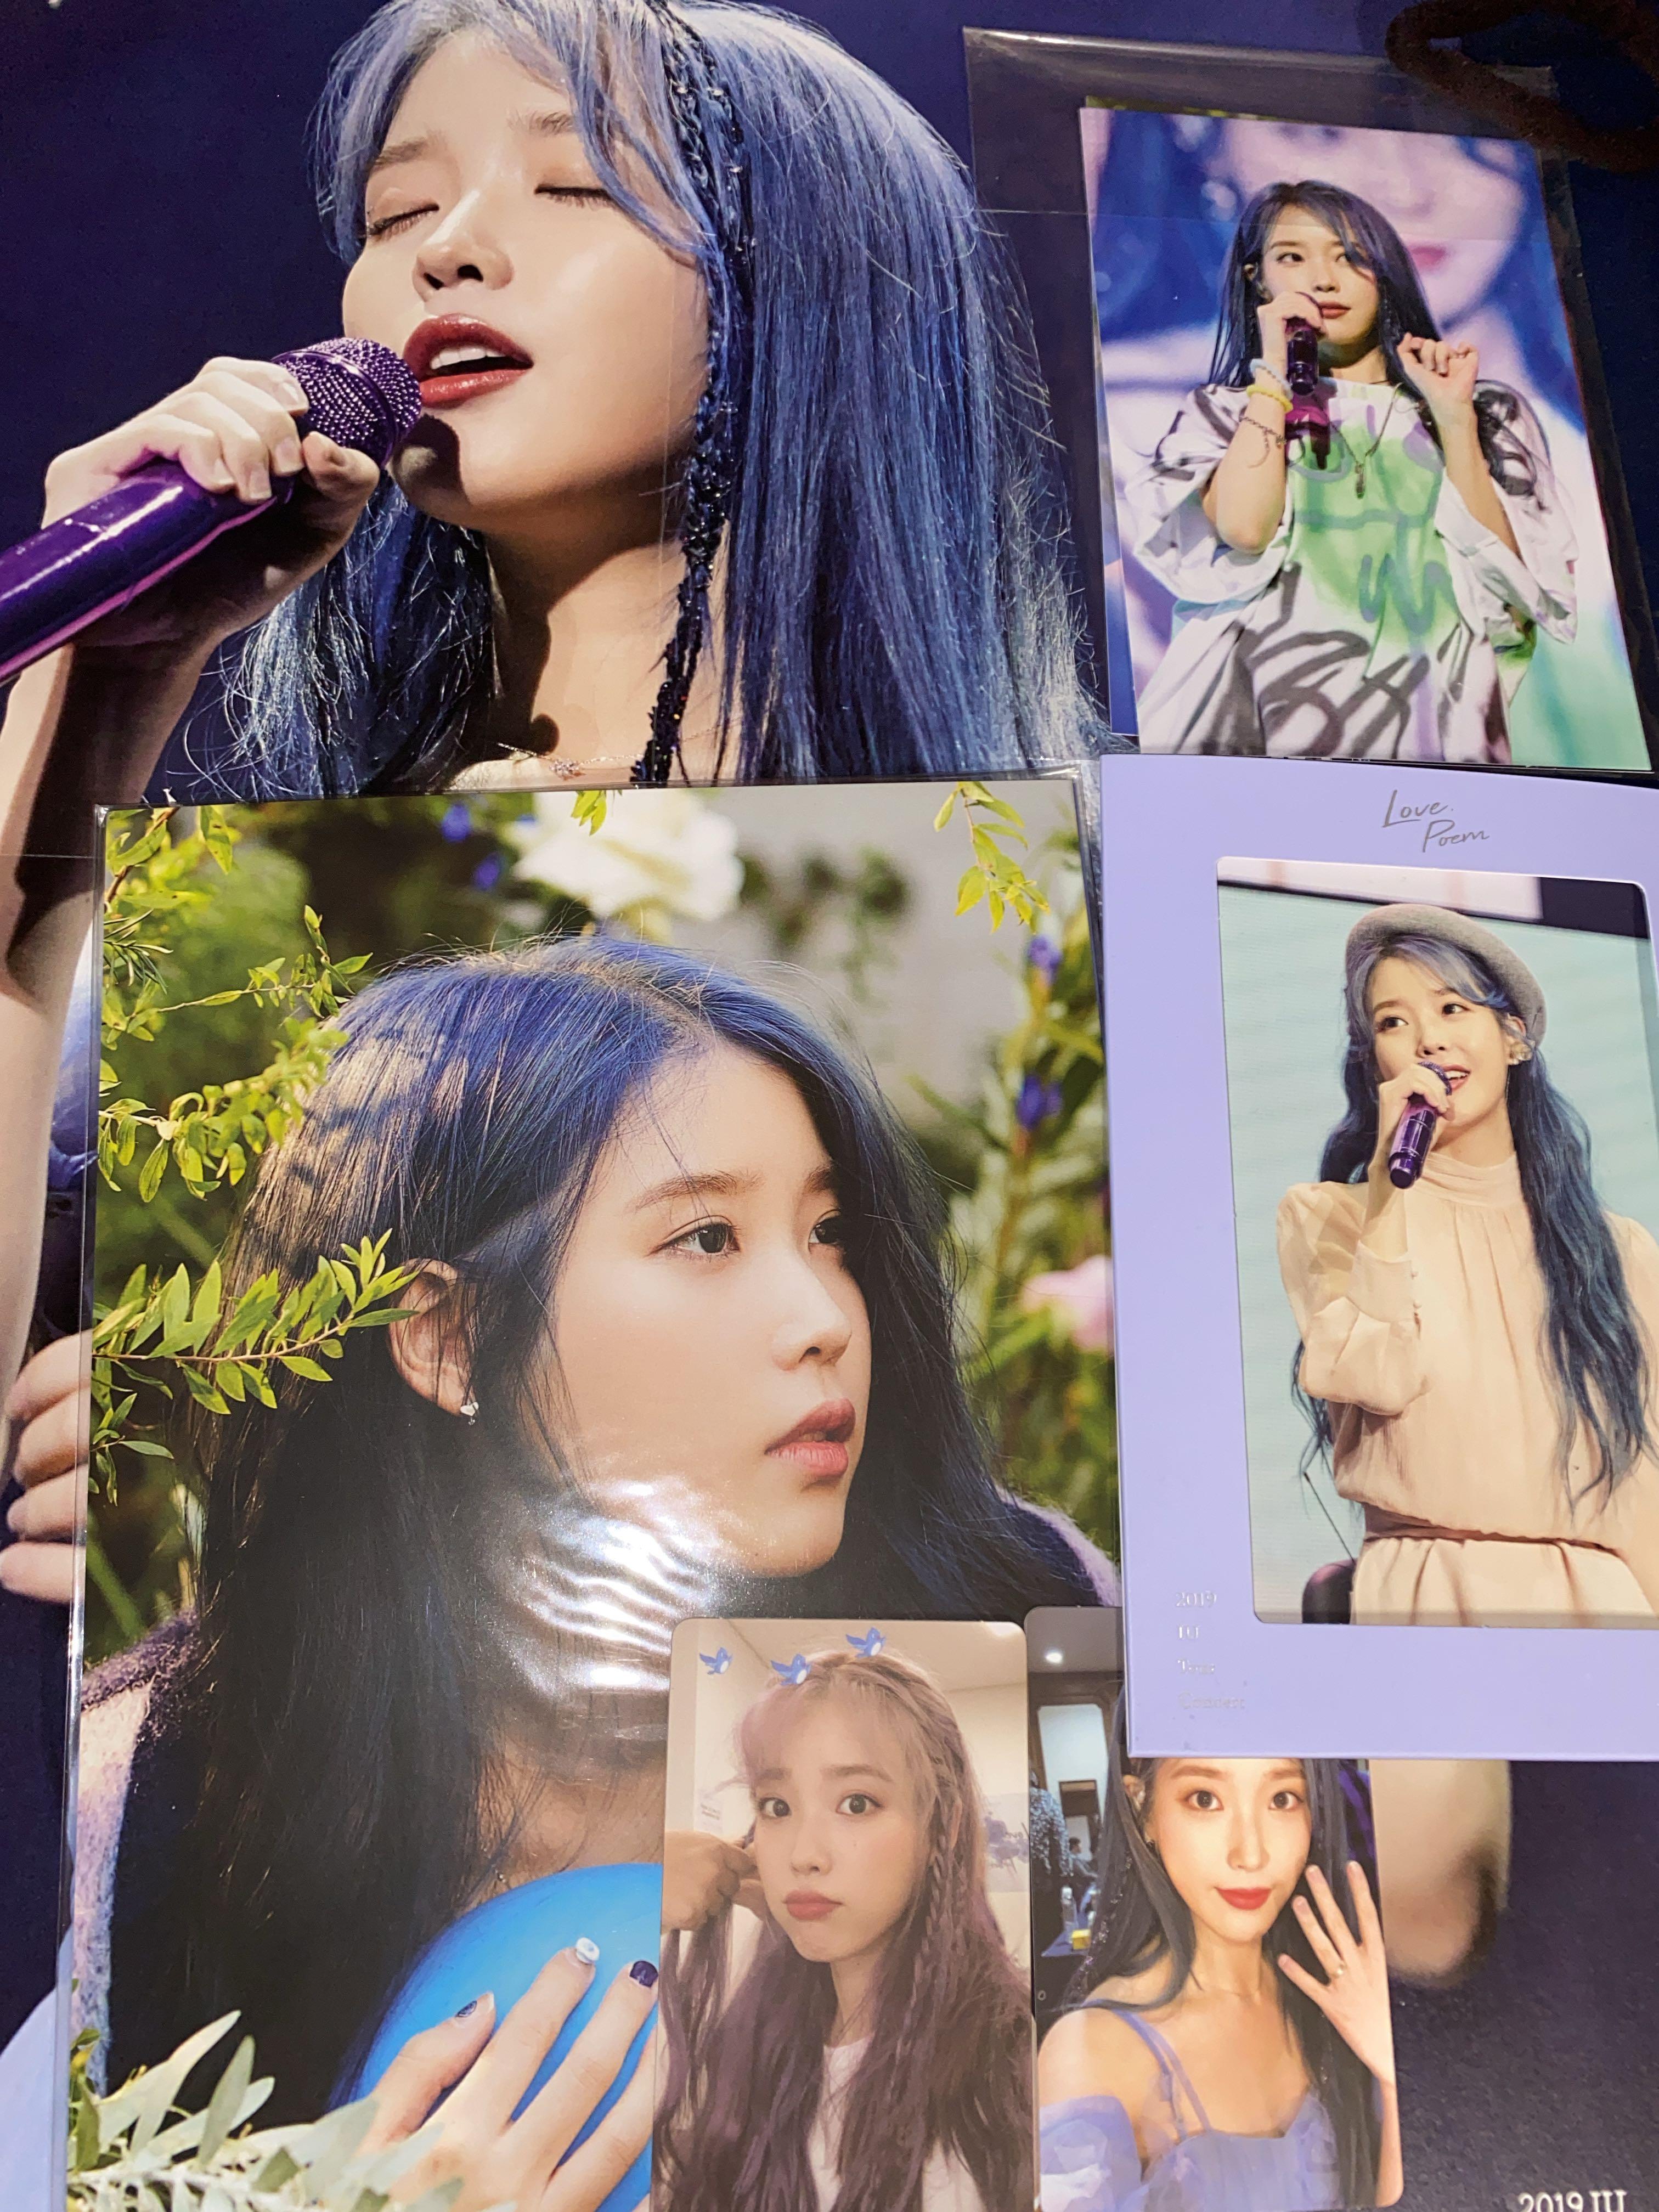 IU 2019 iu tour concert Love poem in Seoul blu-ray, 興趣及遊戲